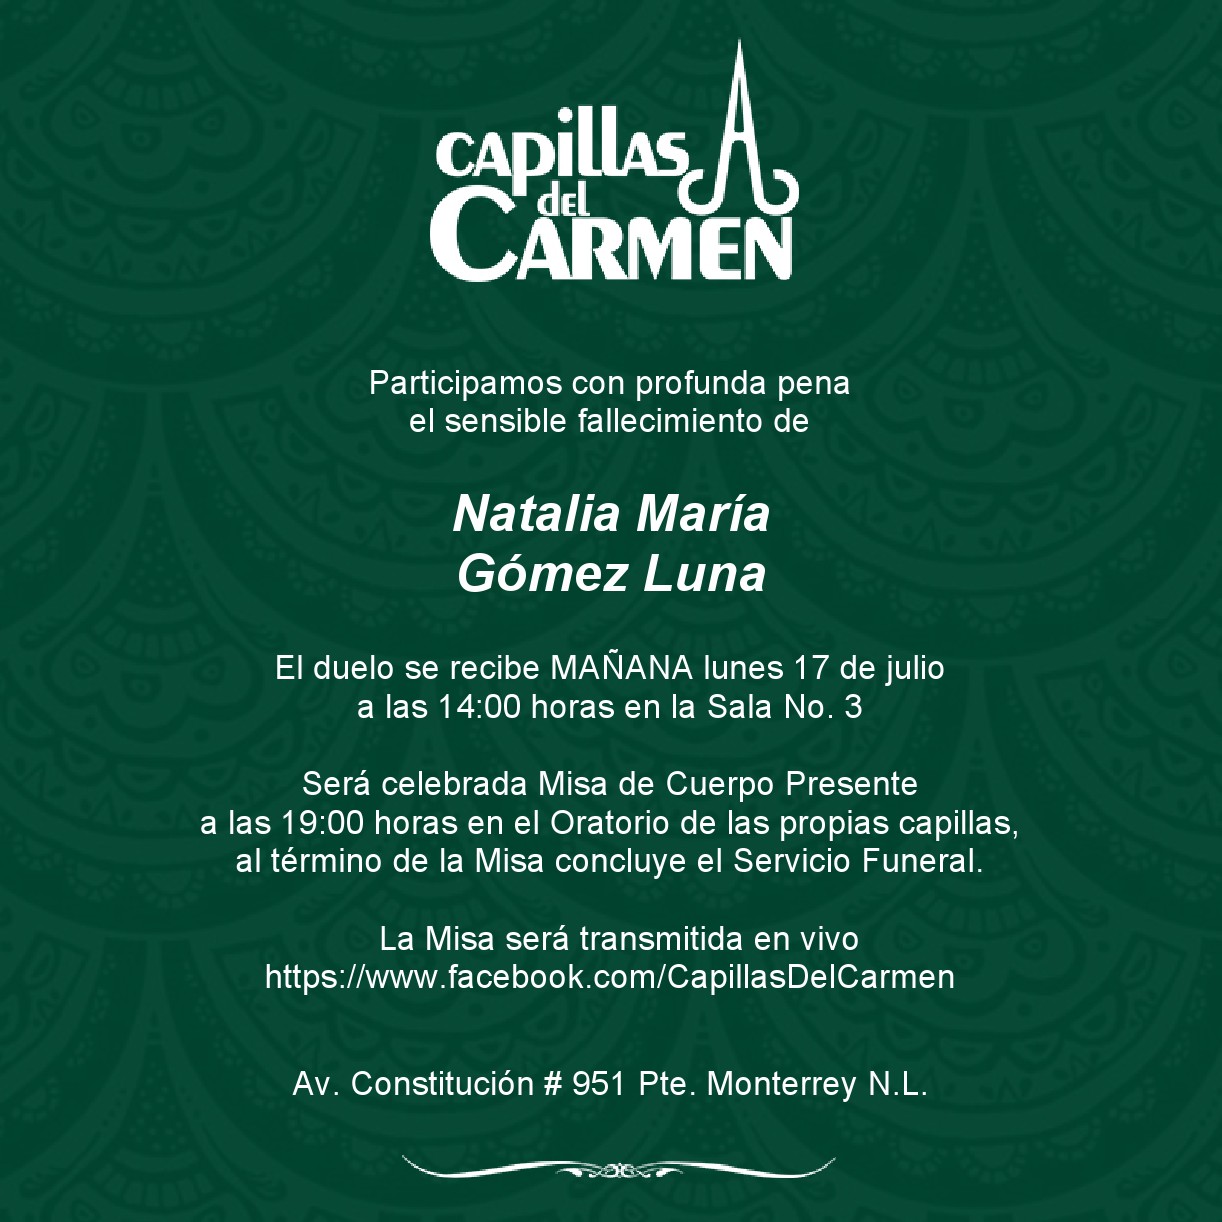 Natalia Ma. Gómez Luna - Capillas del CarmenCapillas del Carmen